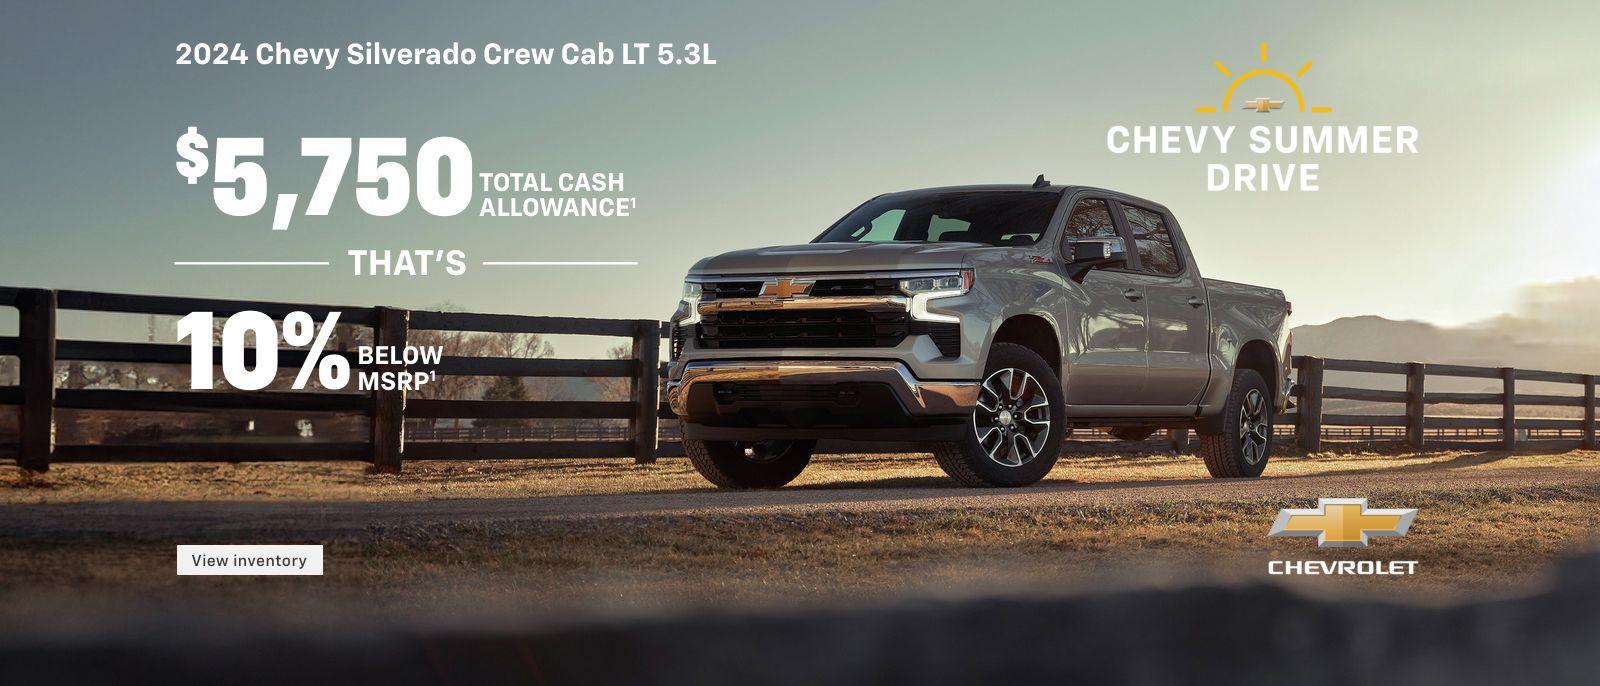 2024 Chevy Silverado 1500 Crew Cab LT 5.3L. Accept all challenges. $5,750 total cash allowance. That's, 10% below MSRP.